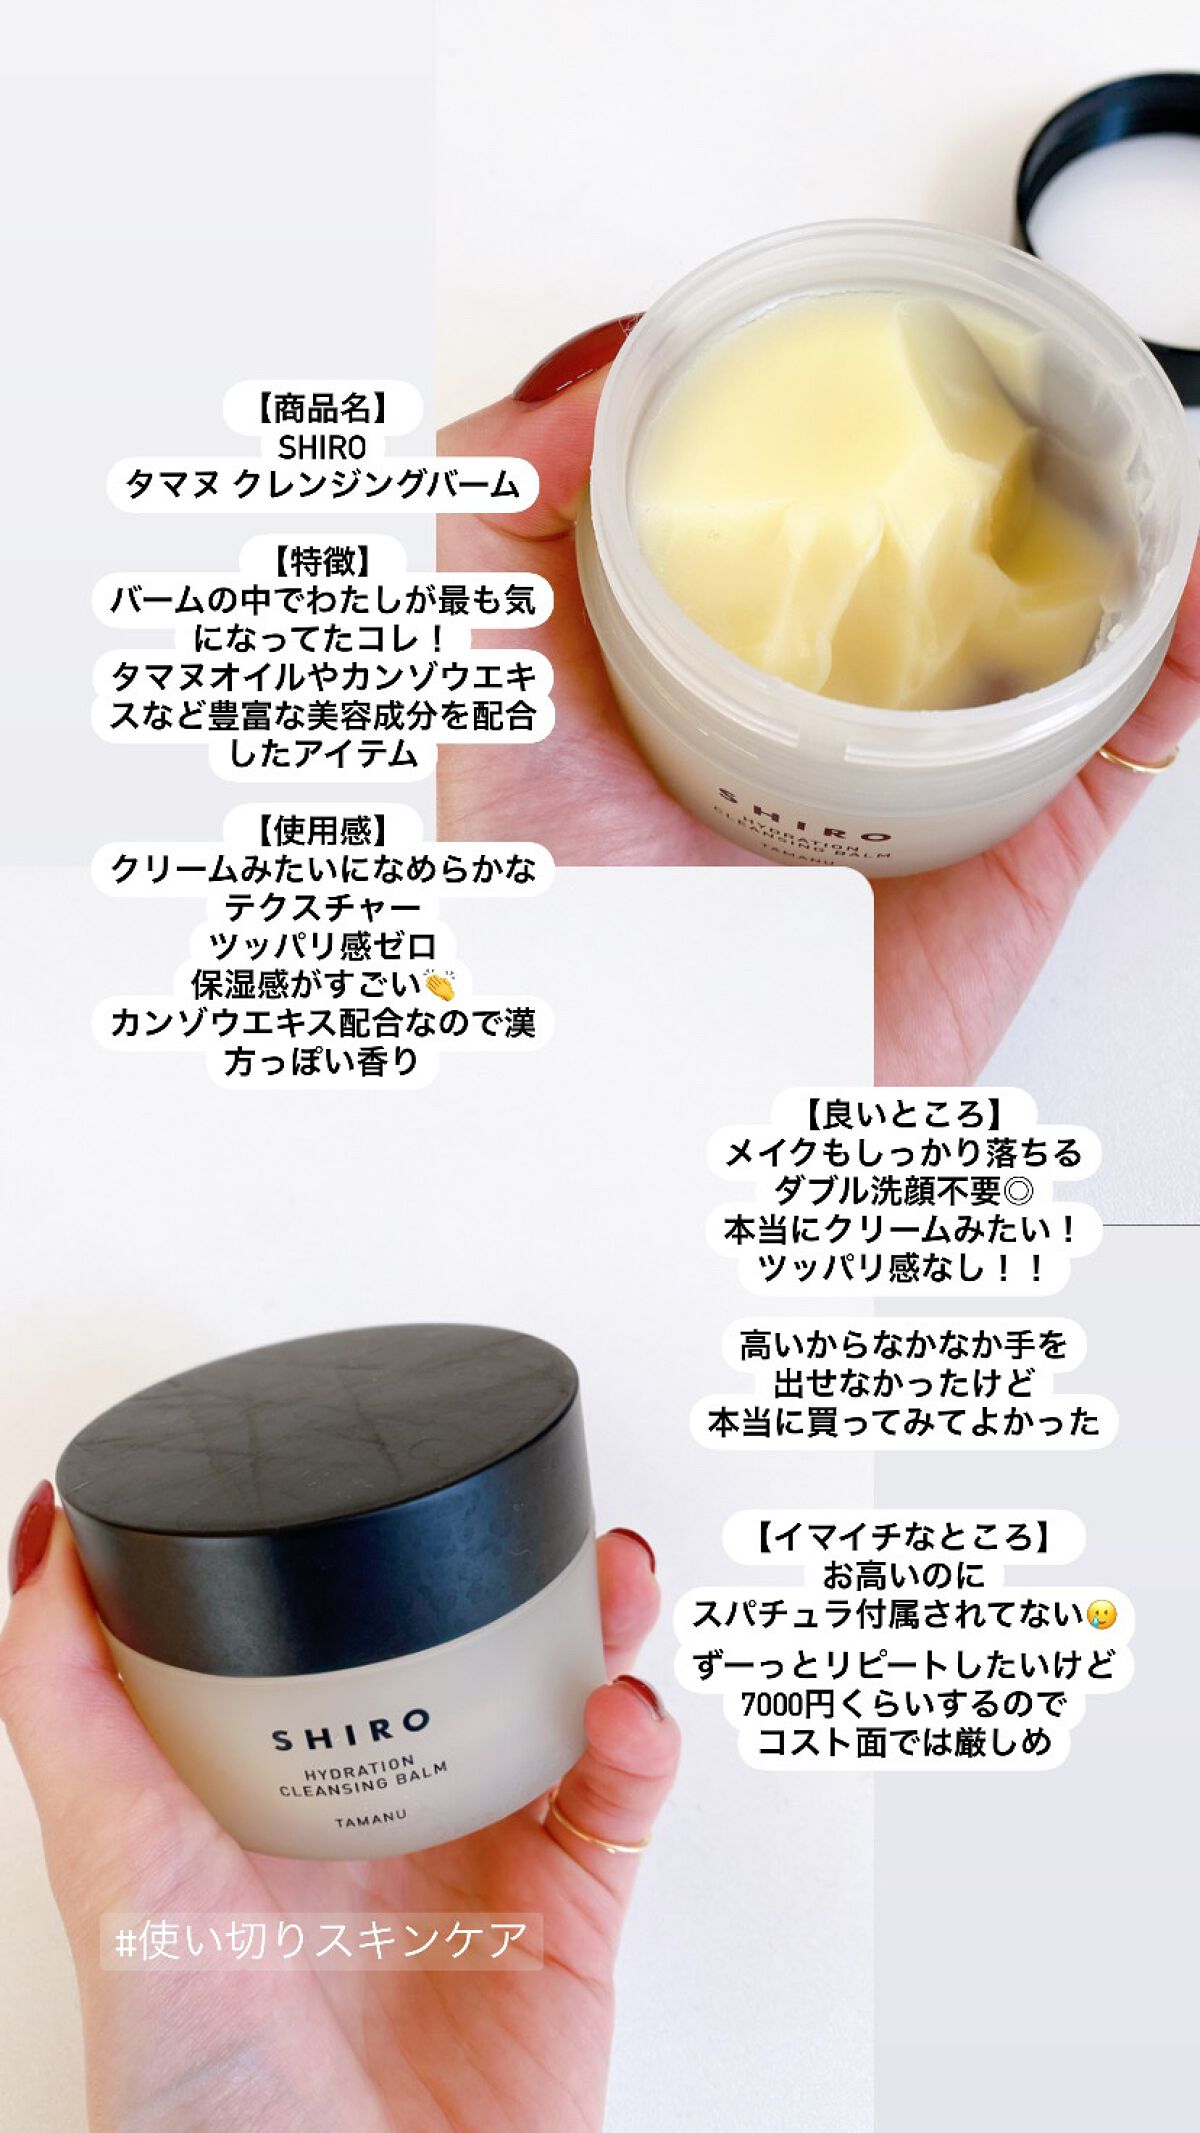 shiro タマヌ クレンジングバーム 90g - 基礎化粧品